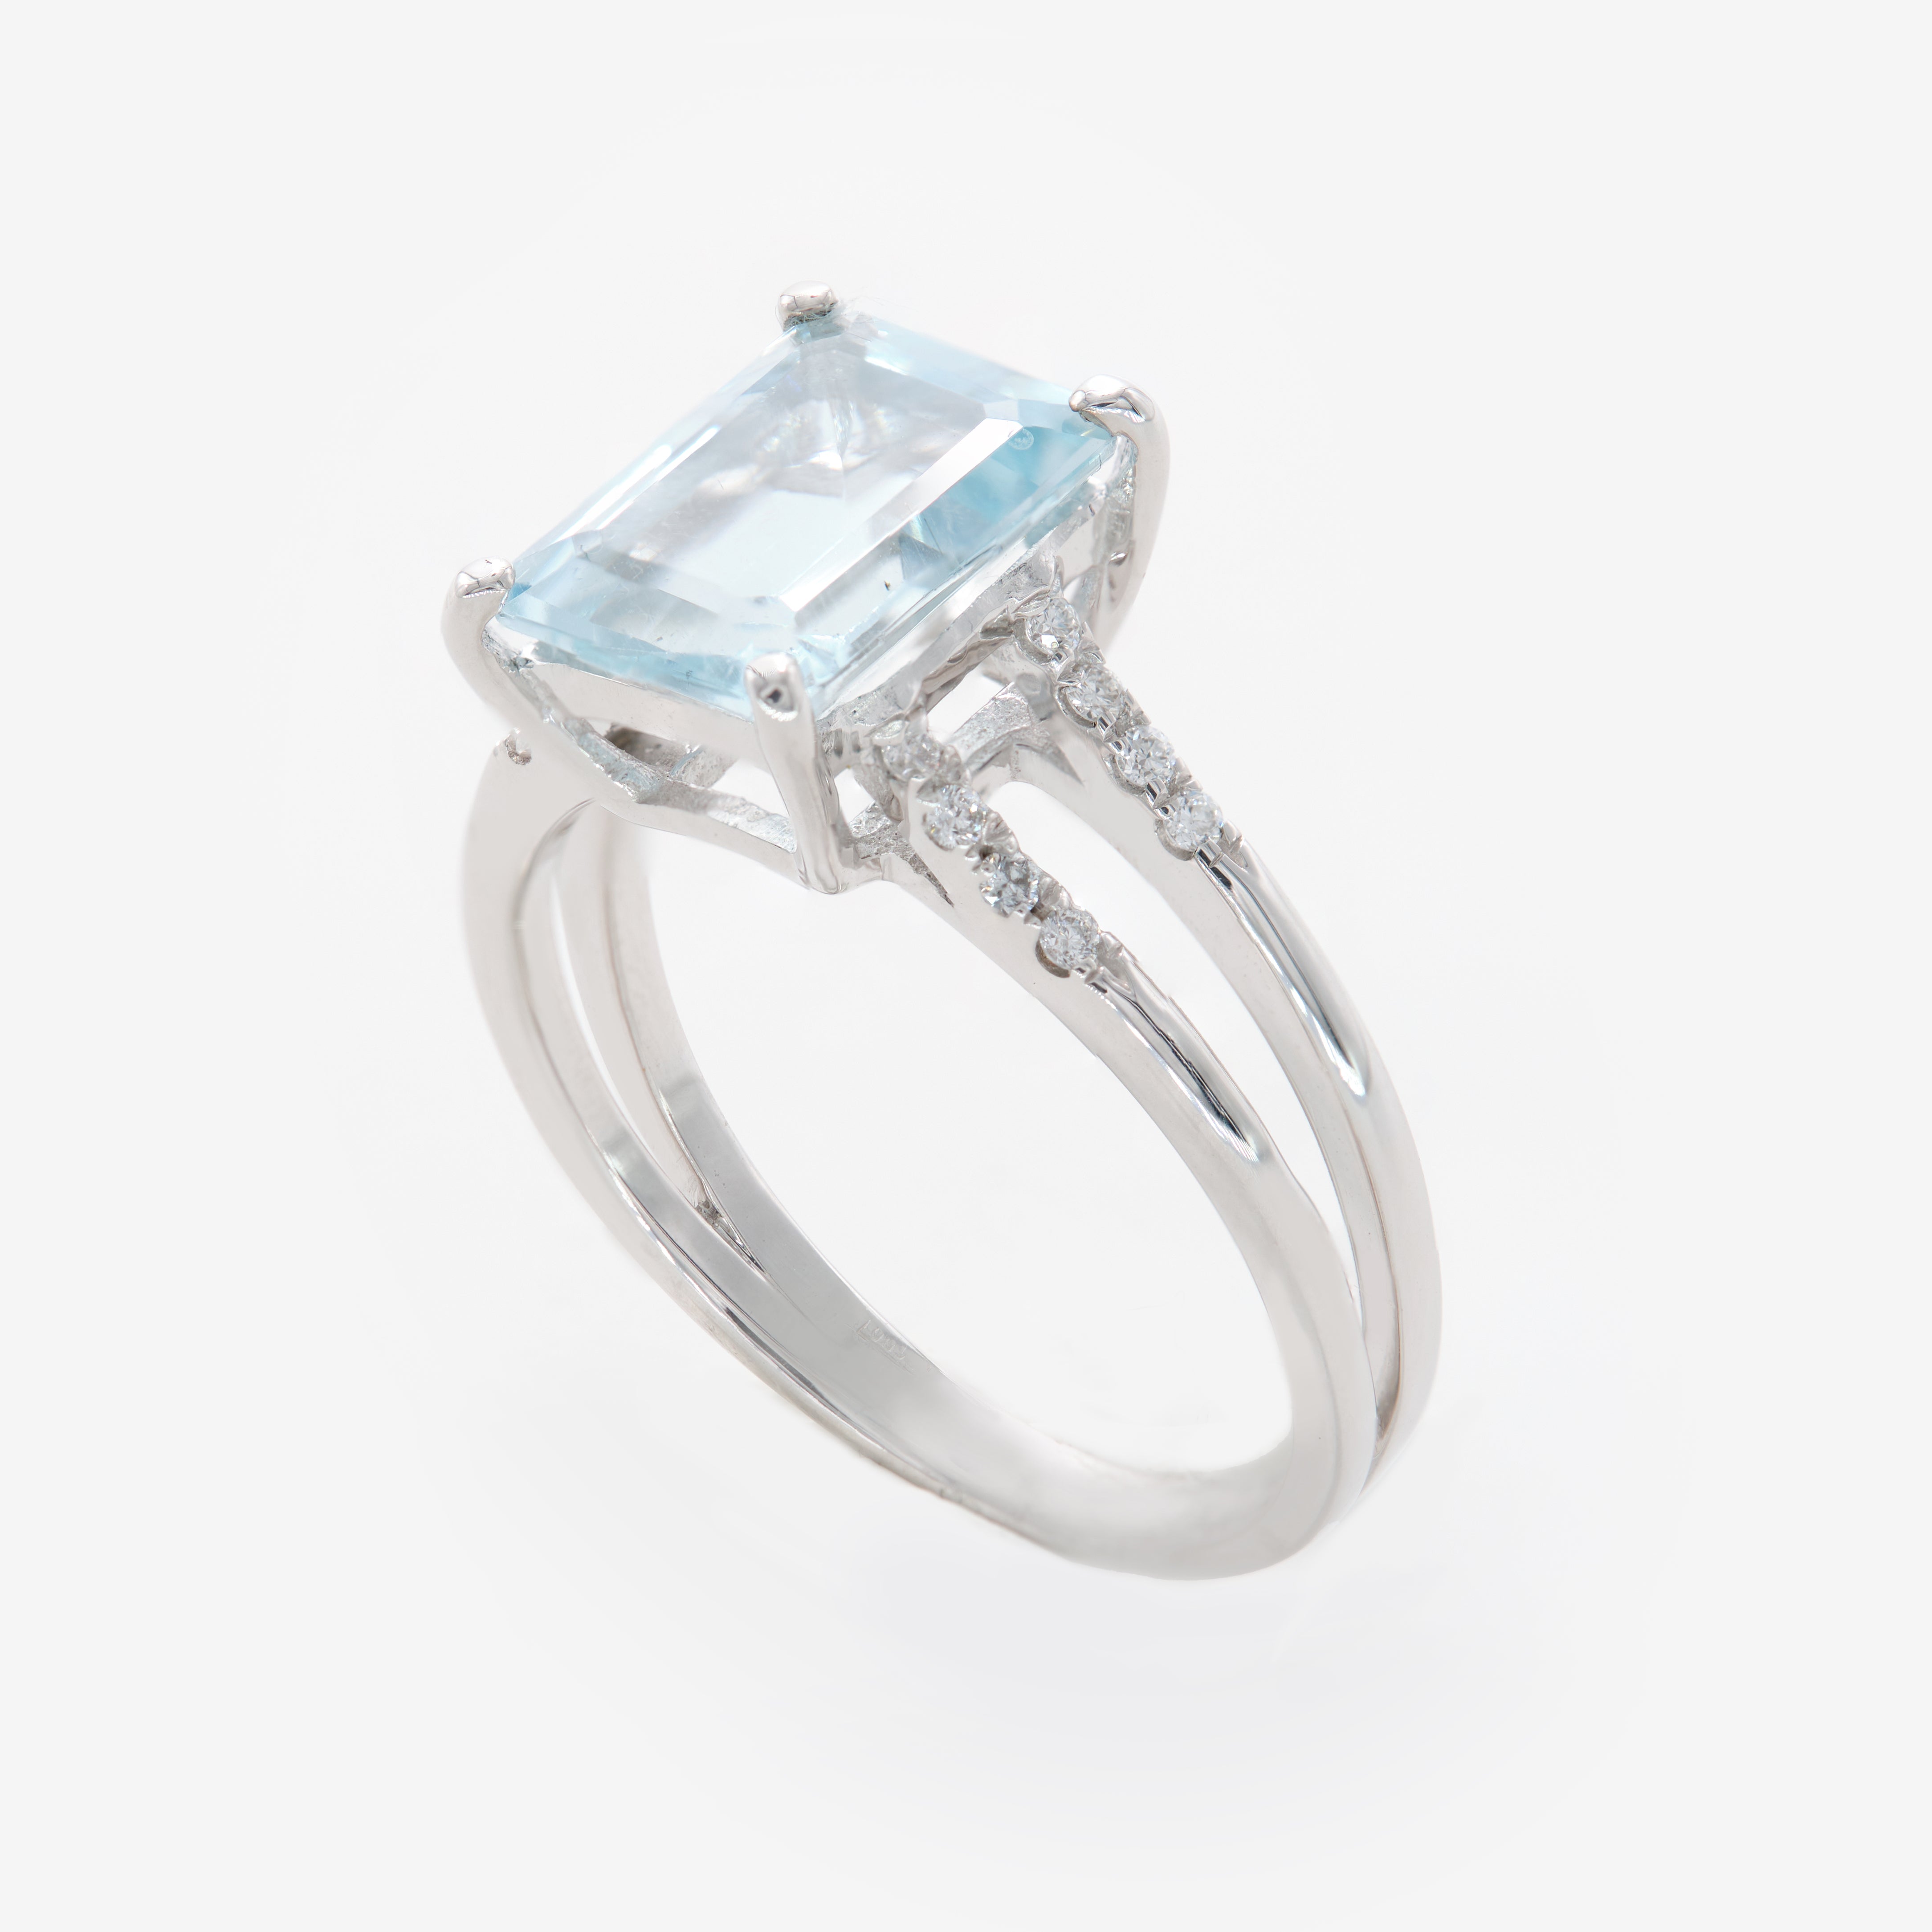 Evea ring with Aquamarine and diamonds